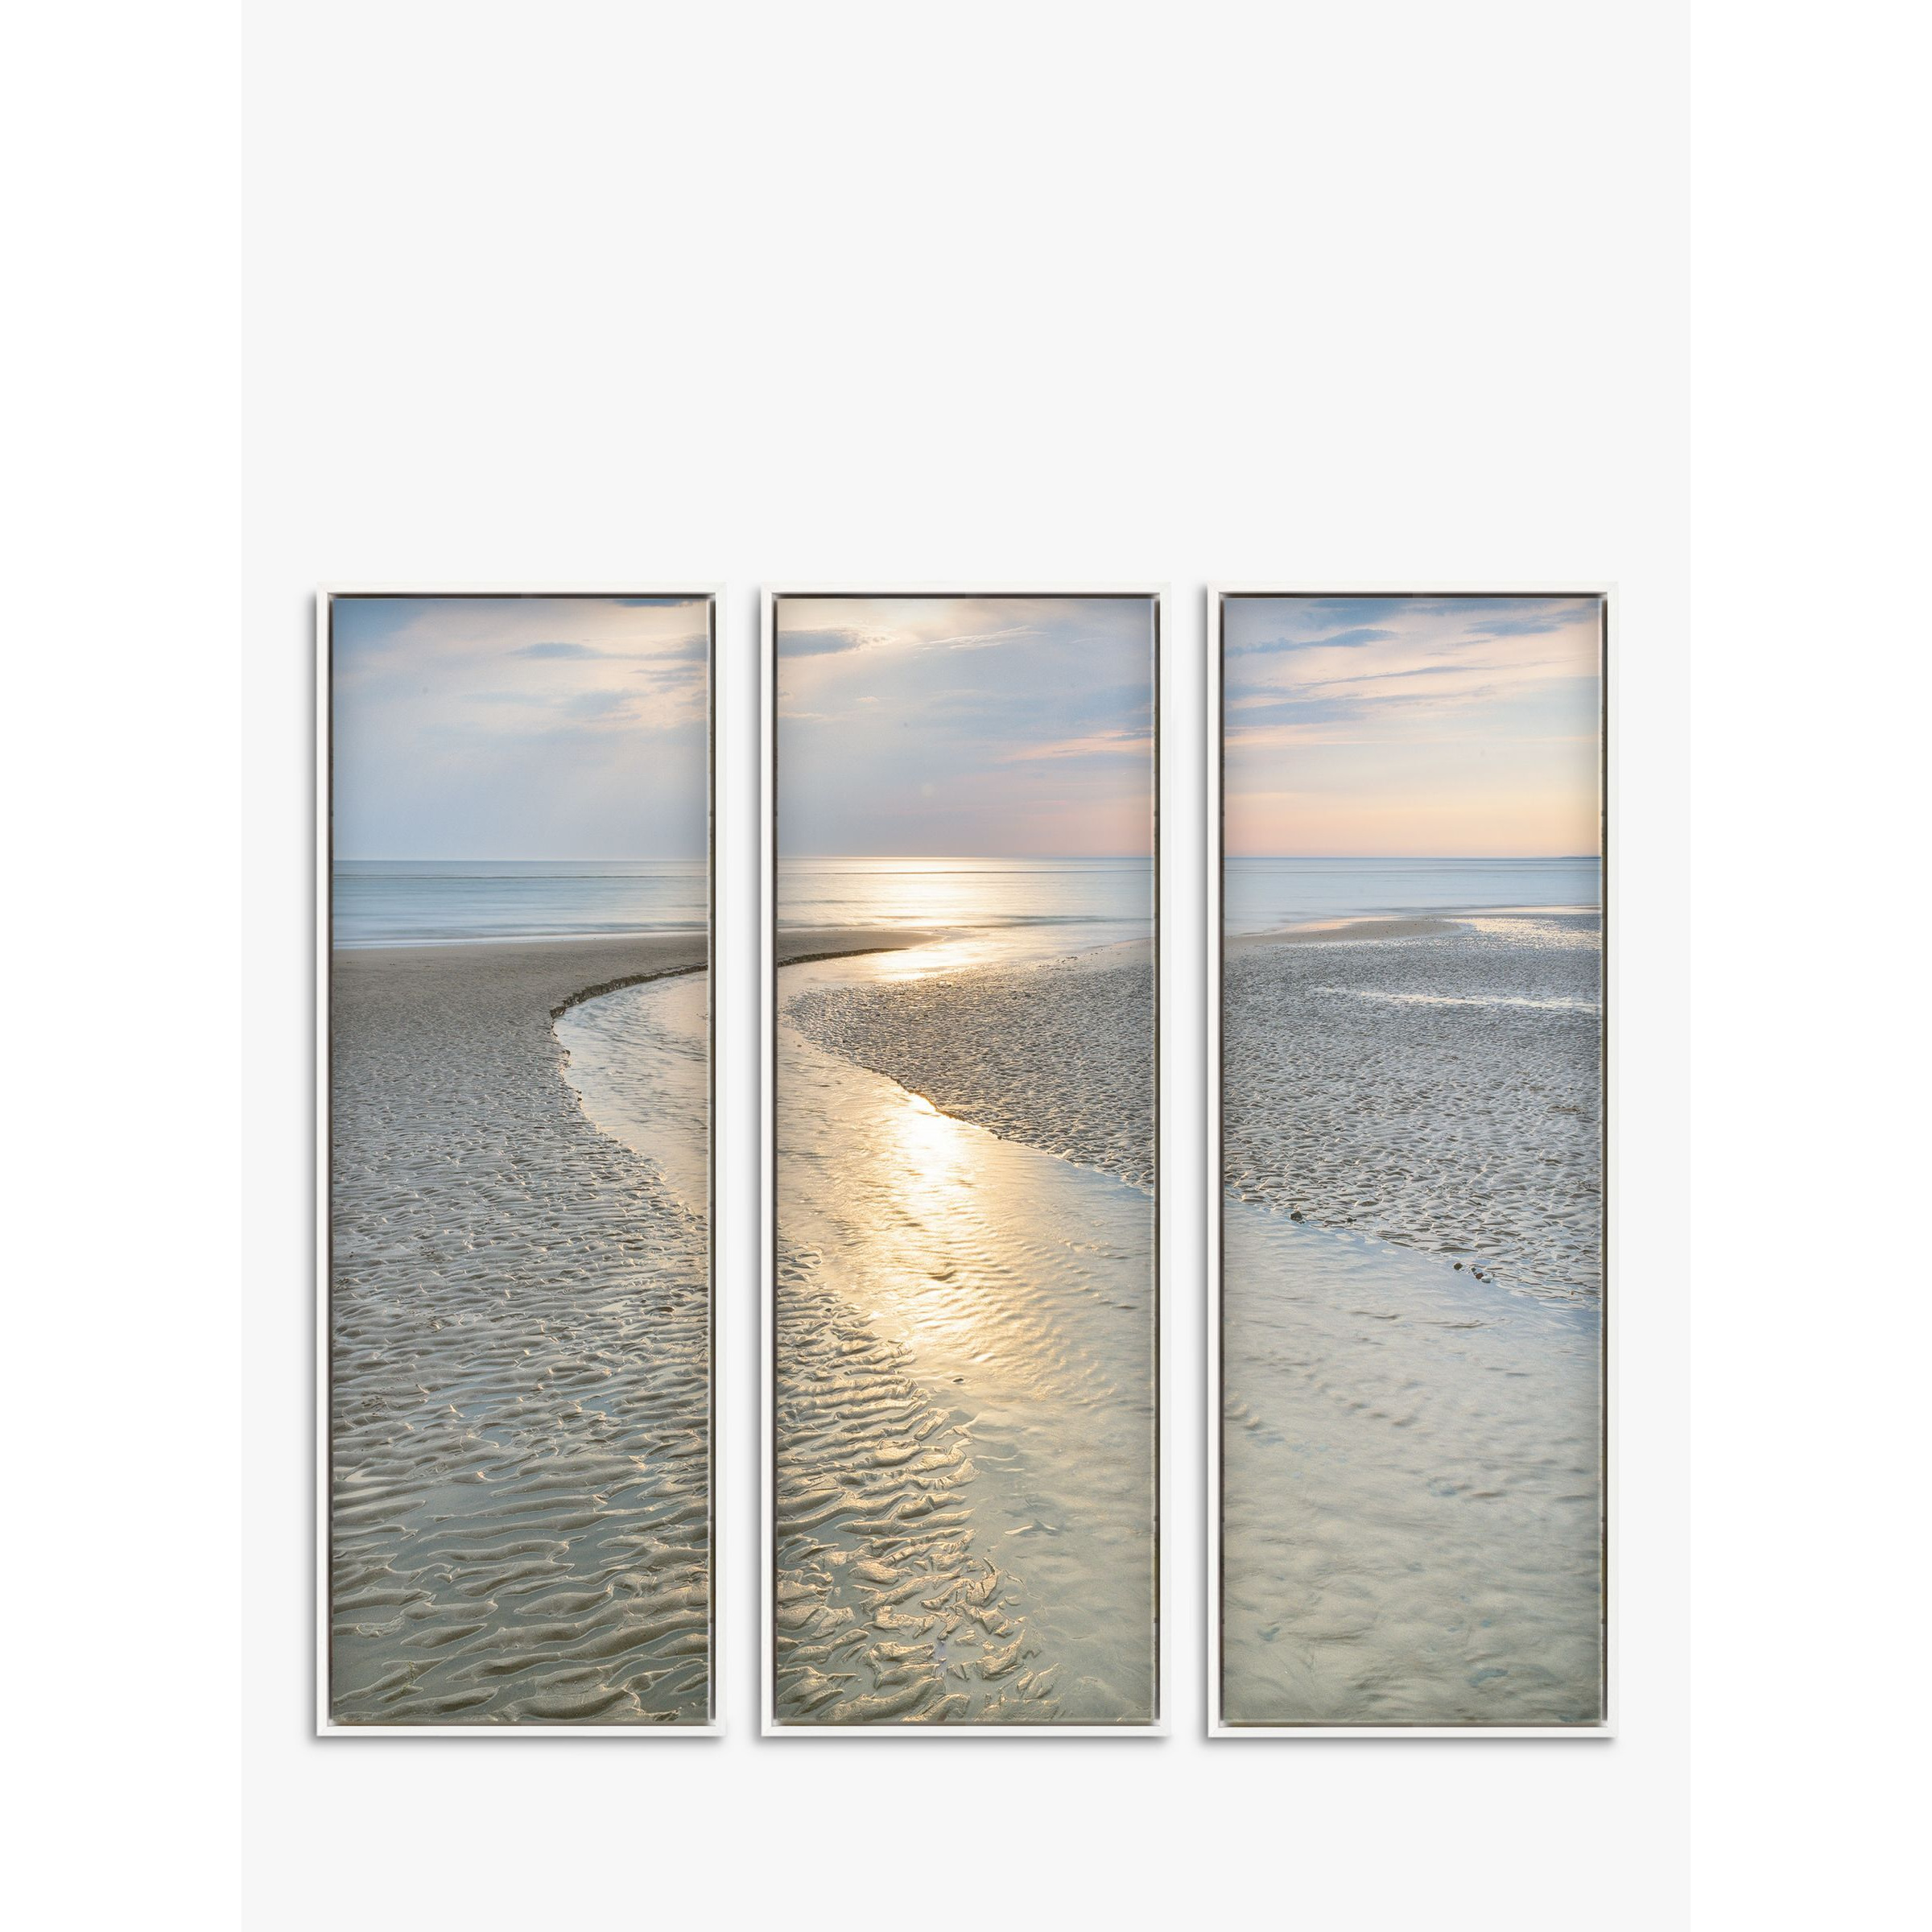 John Lewis Mike Shepherd 'Shimmering Light Seascape' Triptych Framed Canvas, Set of 3, 94 x 34cm, Blue/Multi - image 1